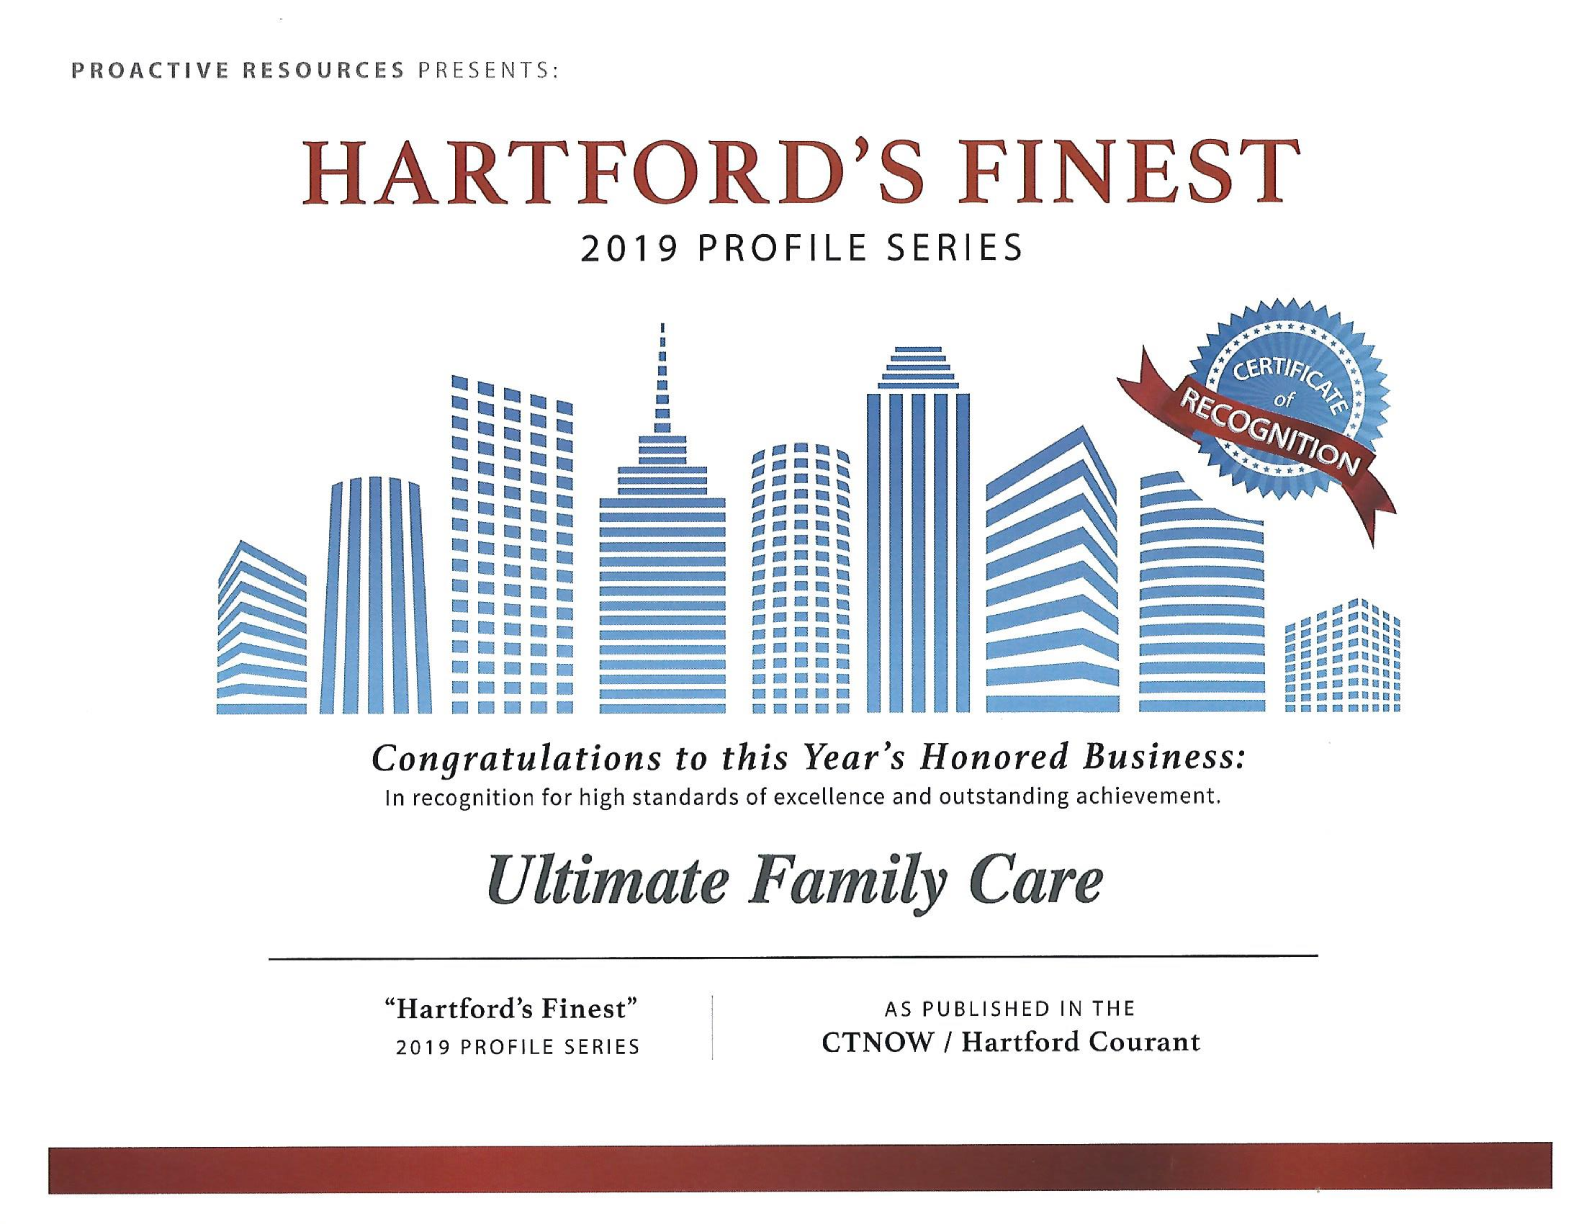 Hartford's Finest 2019 Profile Series